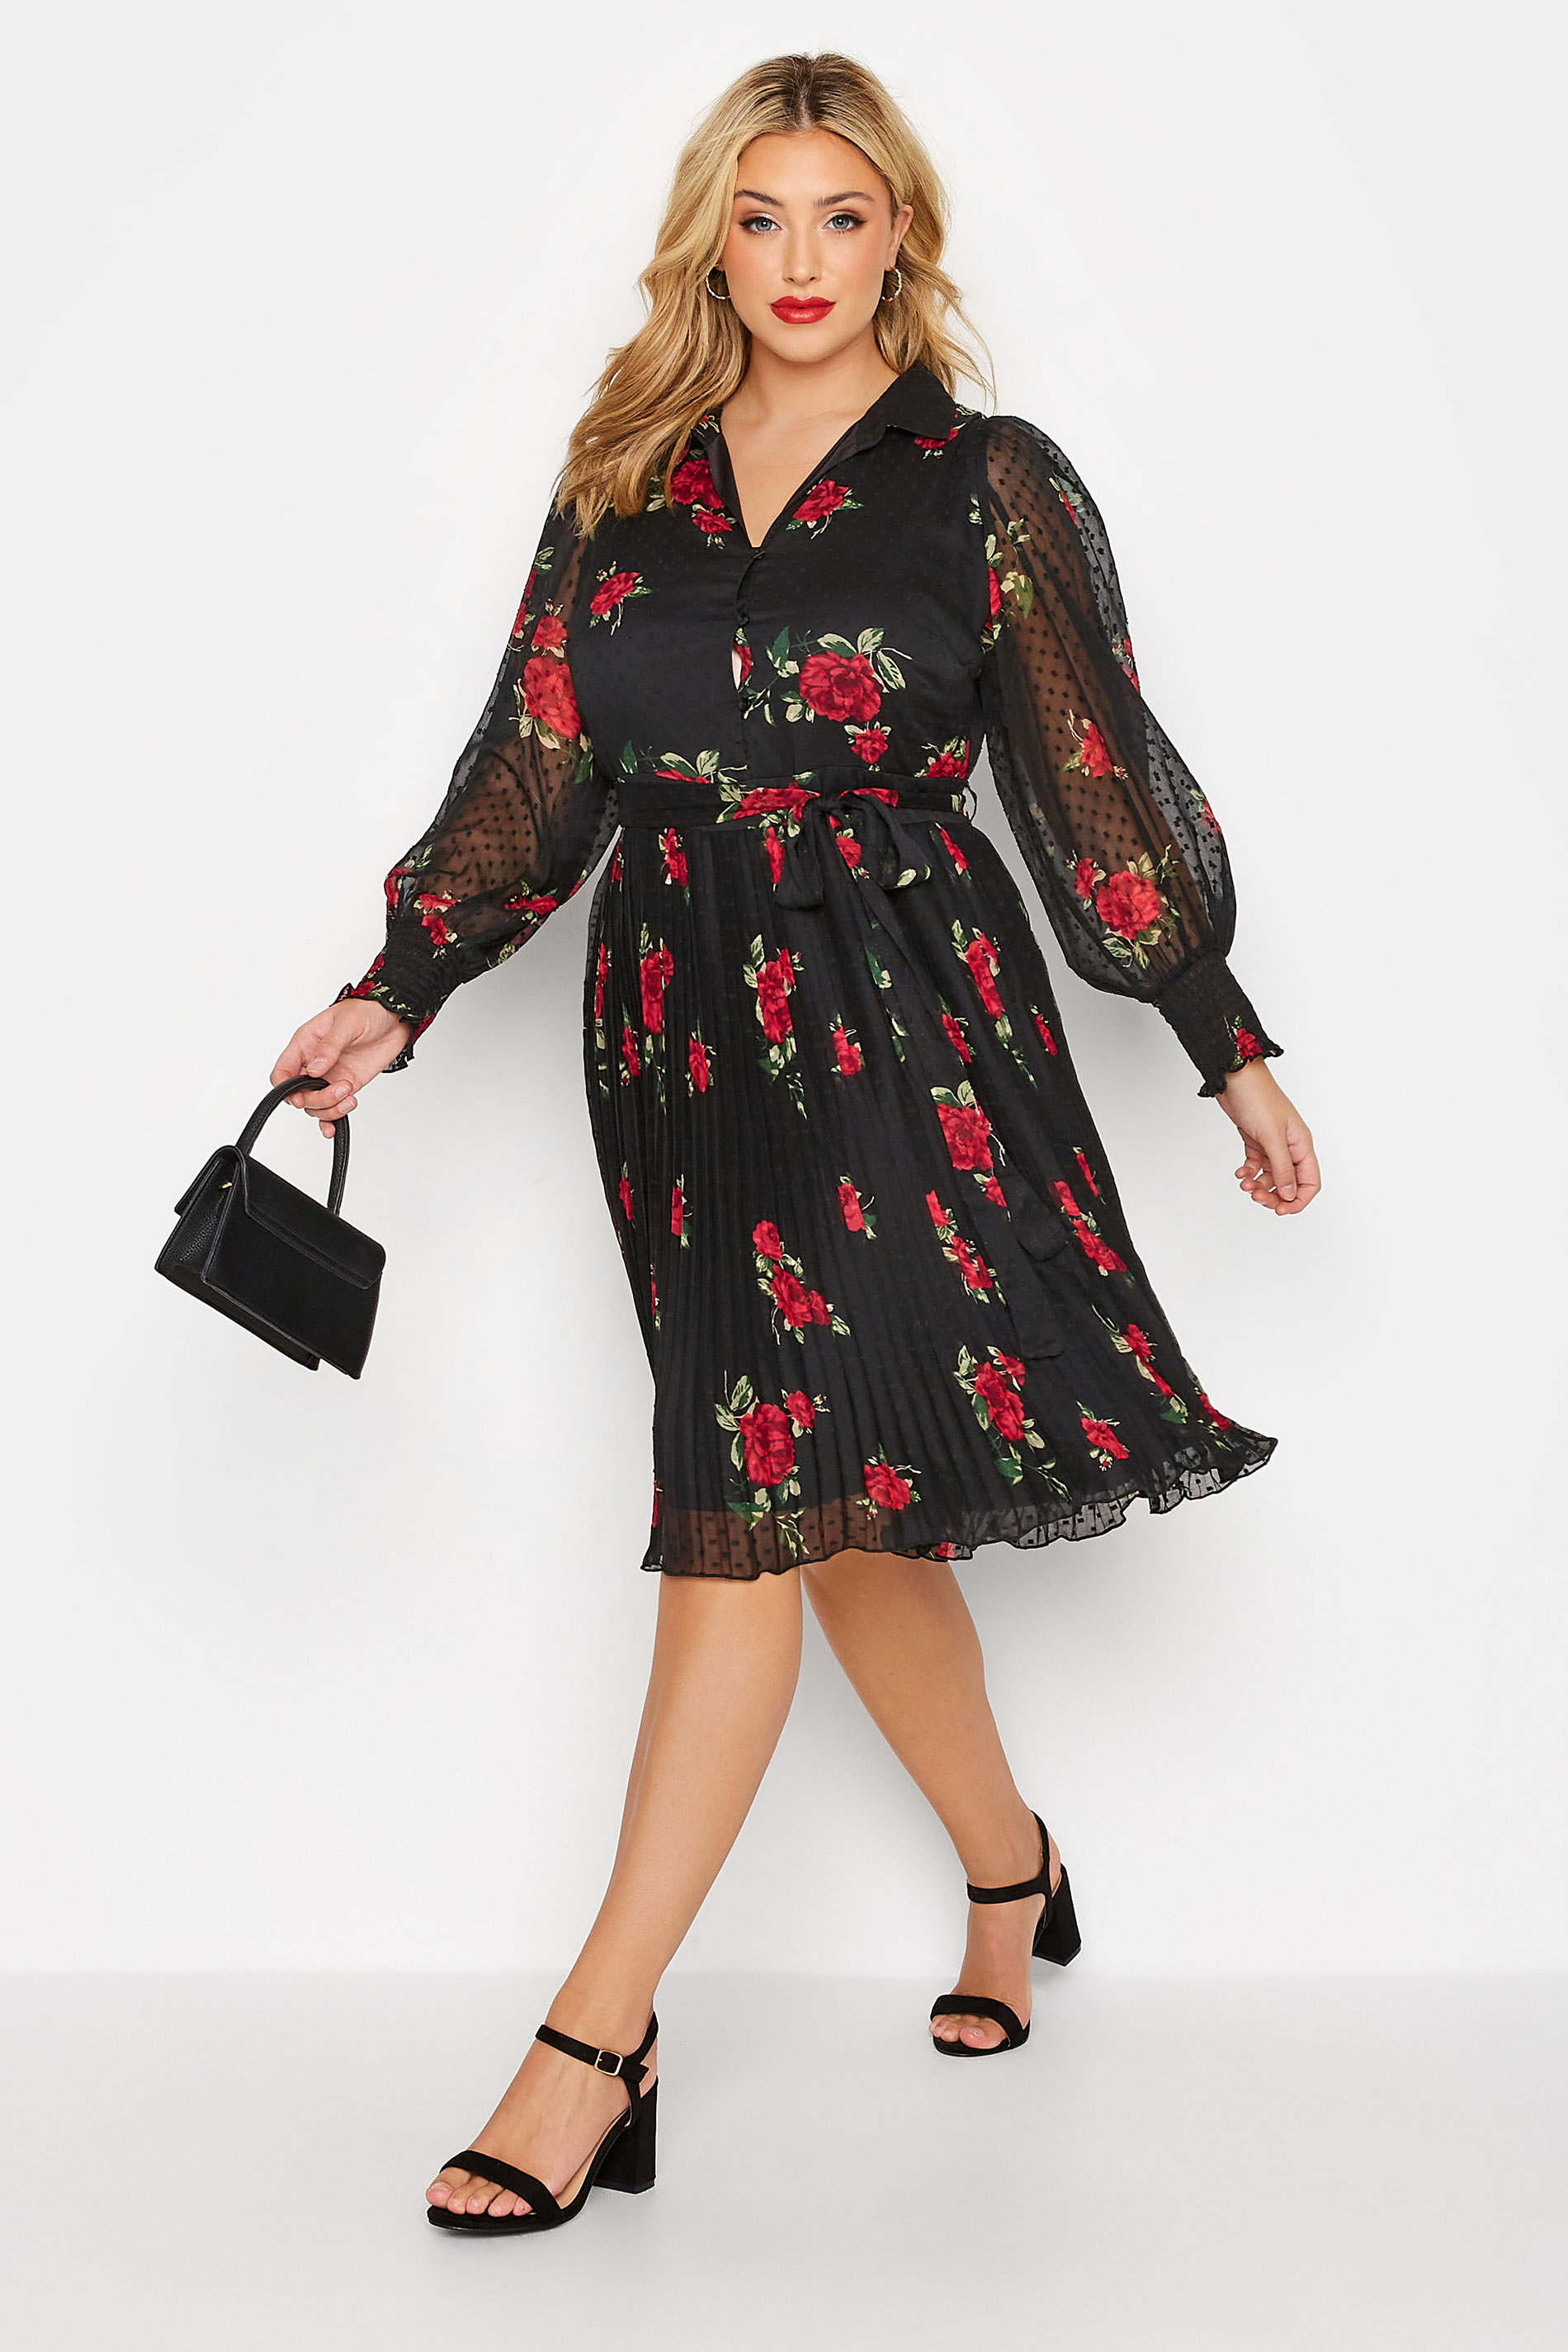 YOURS LONDON Plus Size Black Rose Print Dobby Shirt Dress | Yours Clothing 1